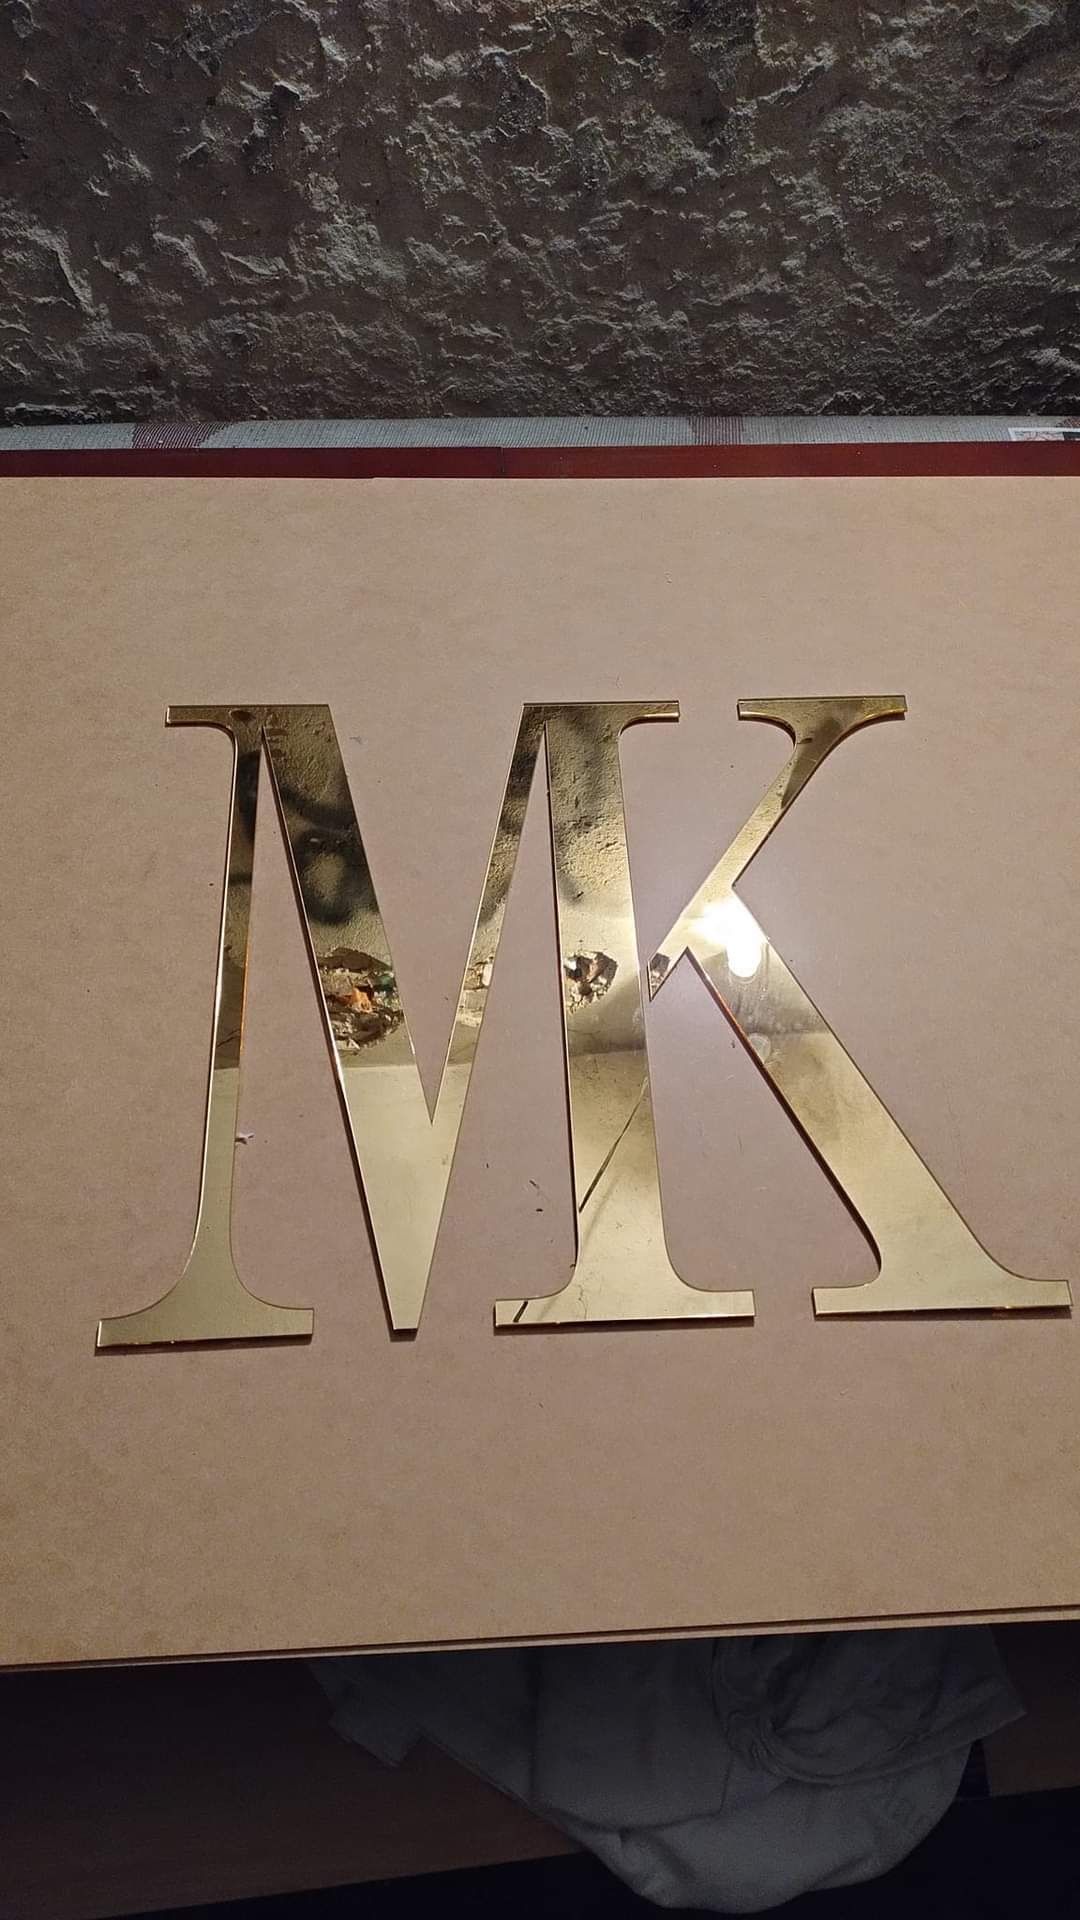 Logo gotowe z napisem "MK STUDIO NAILS"